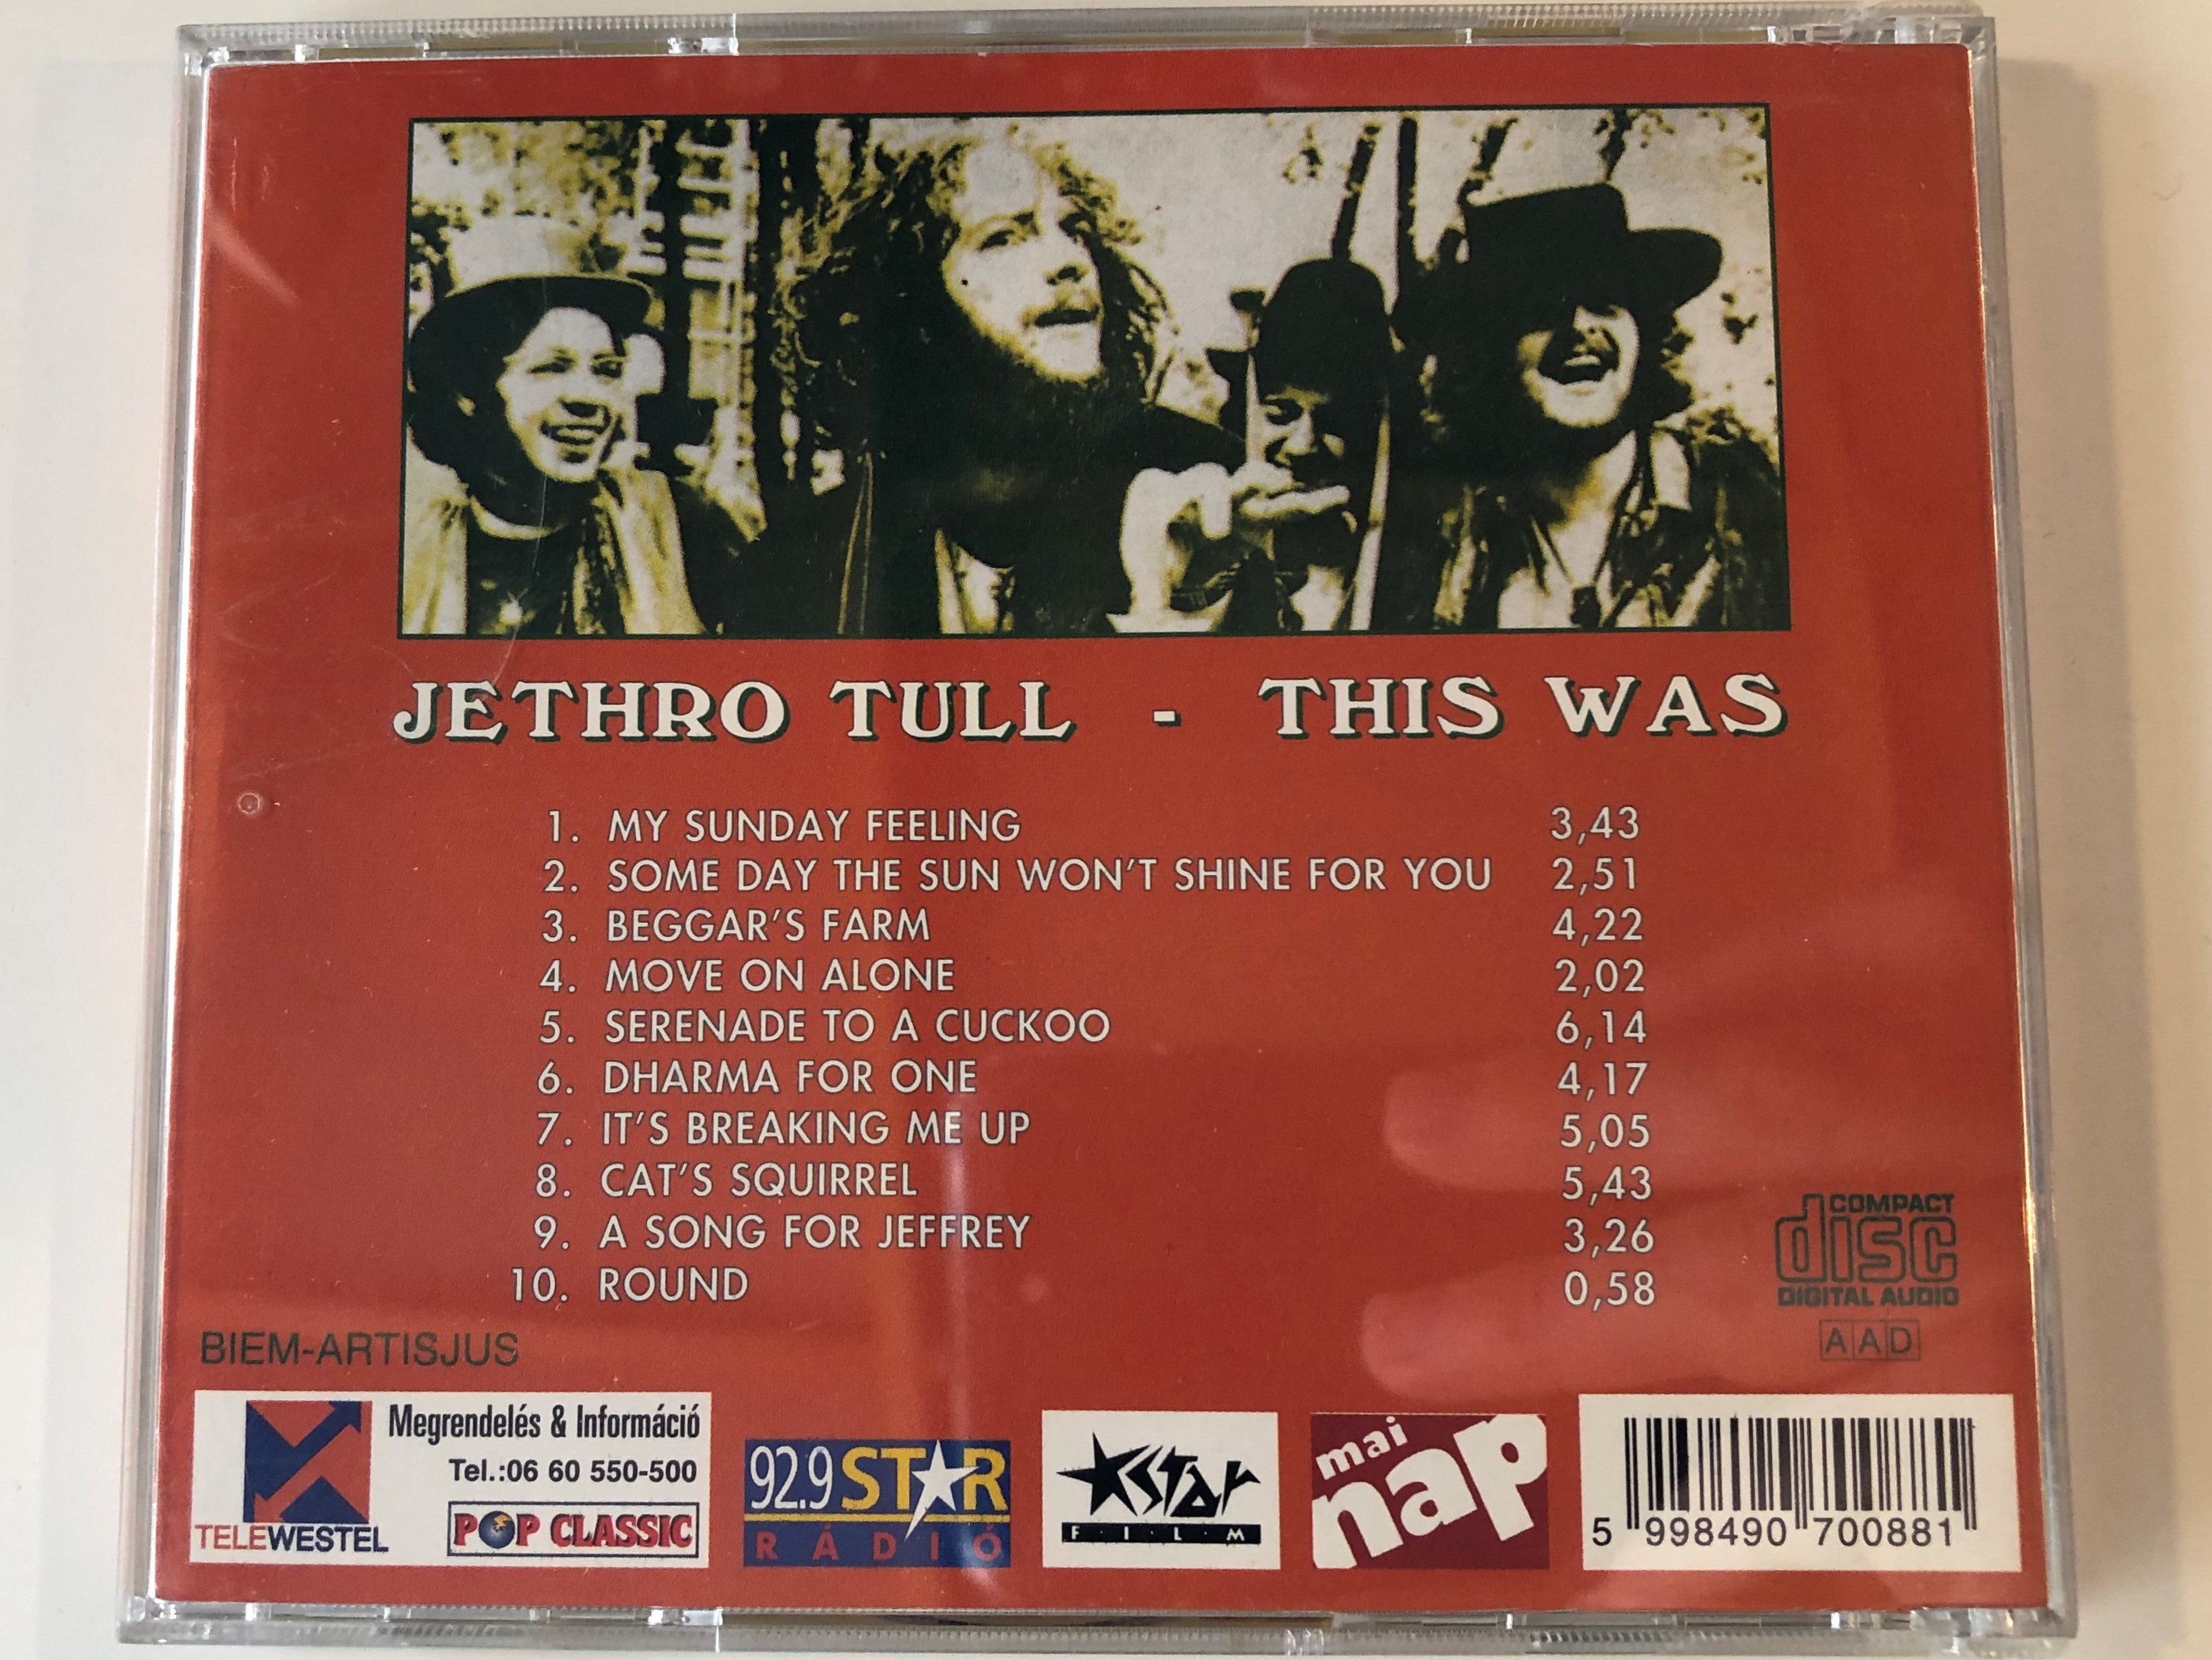 jethro-tull-this-was-pop-classic-audio-cd-5998490700881-2-.jpg